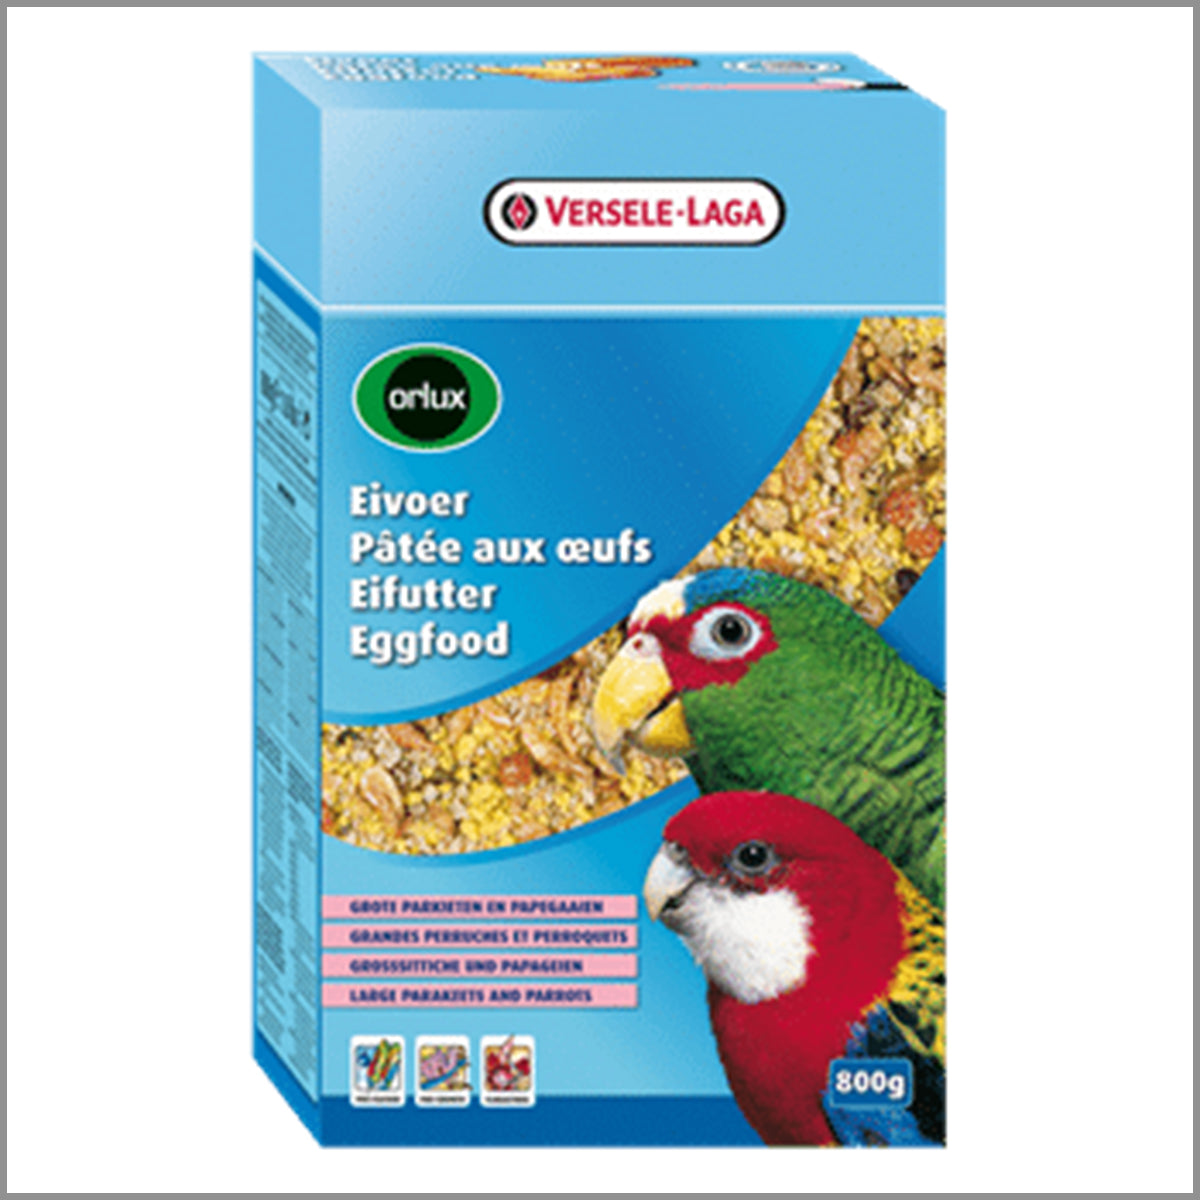 Versele-Laga Orlux Dry Eggfood Large Parakeet And Parrot(800g)_大鸚鵡和鸚鵡的雞蛋食品(800克)